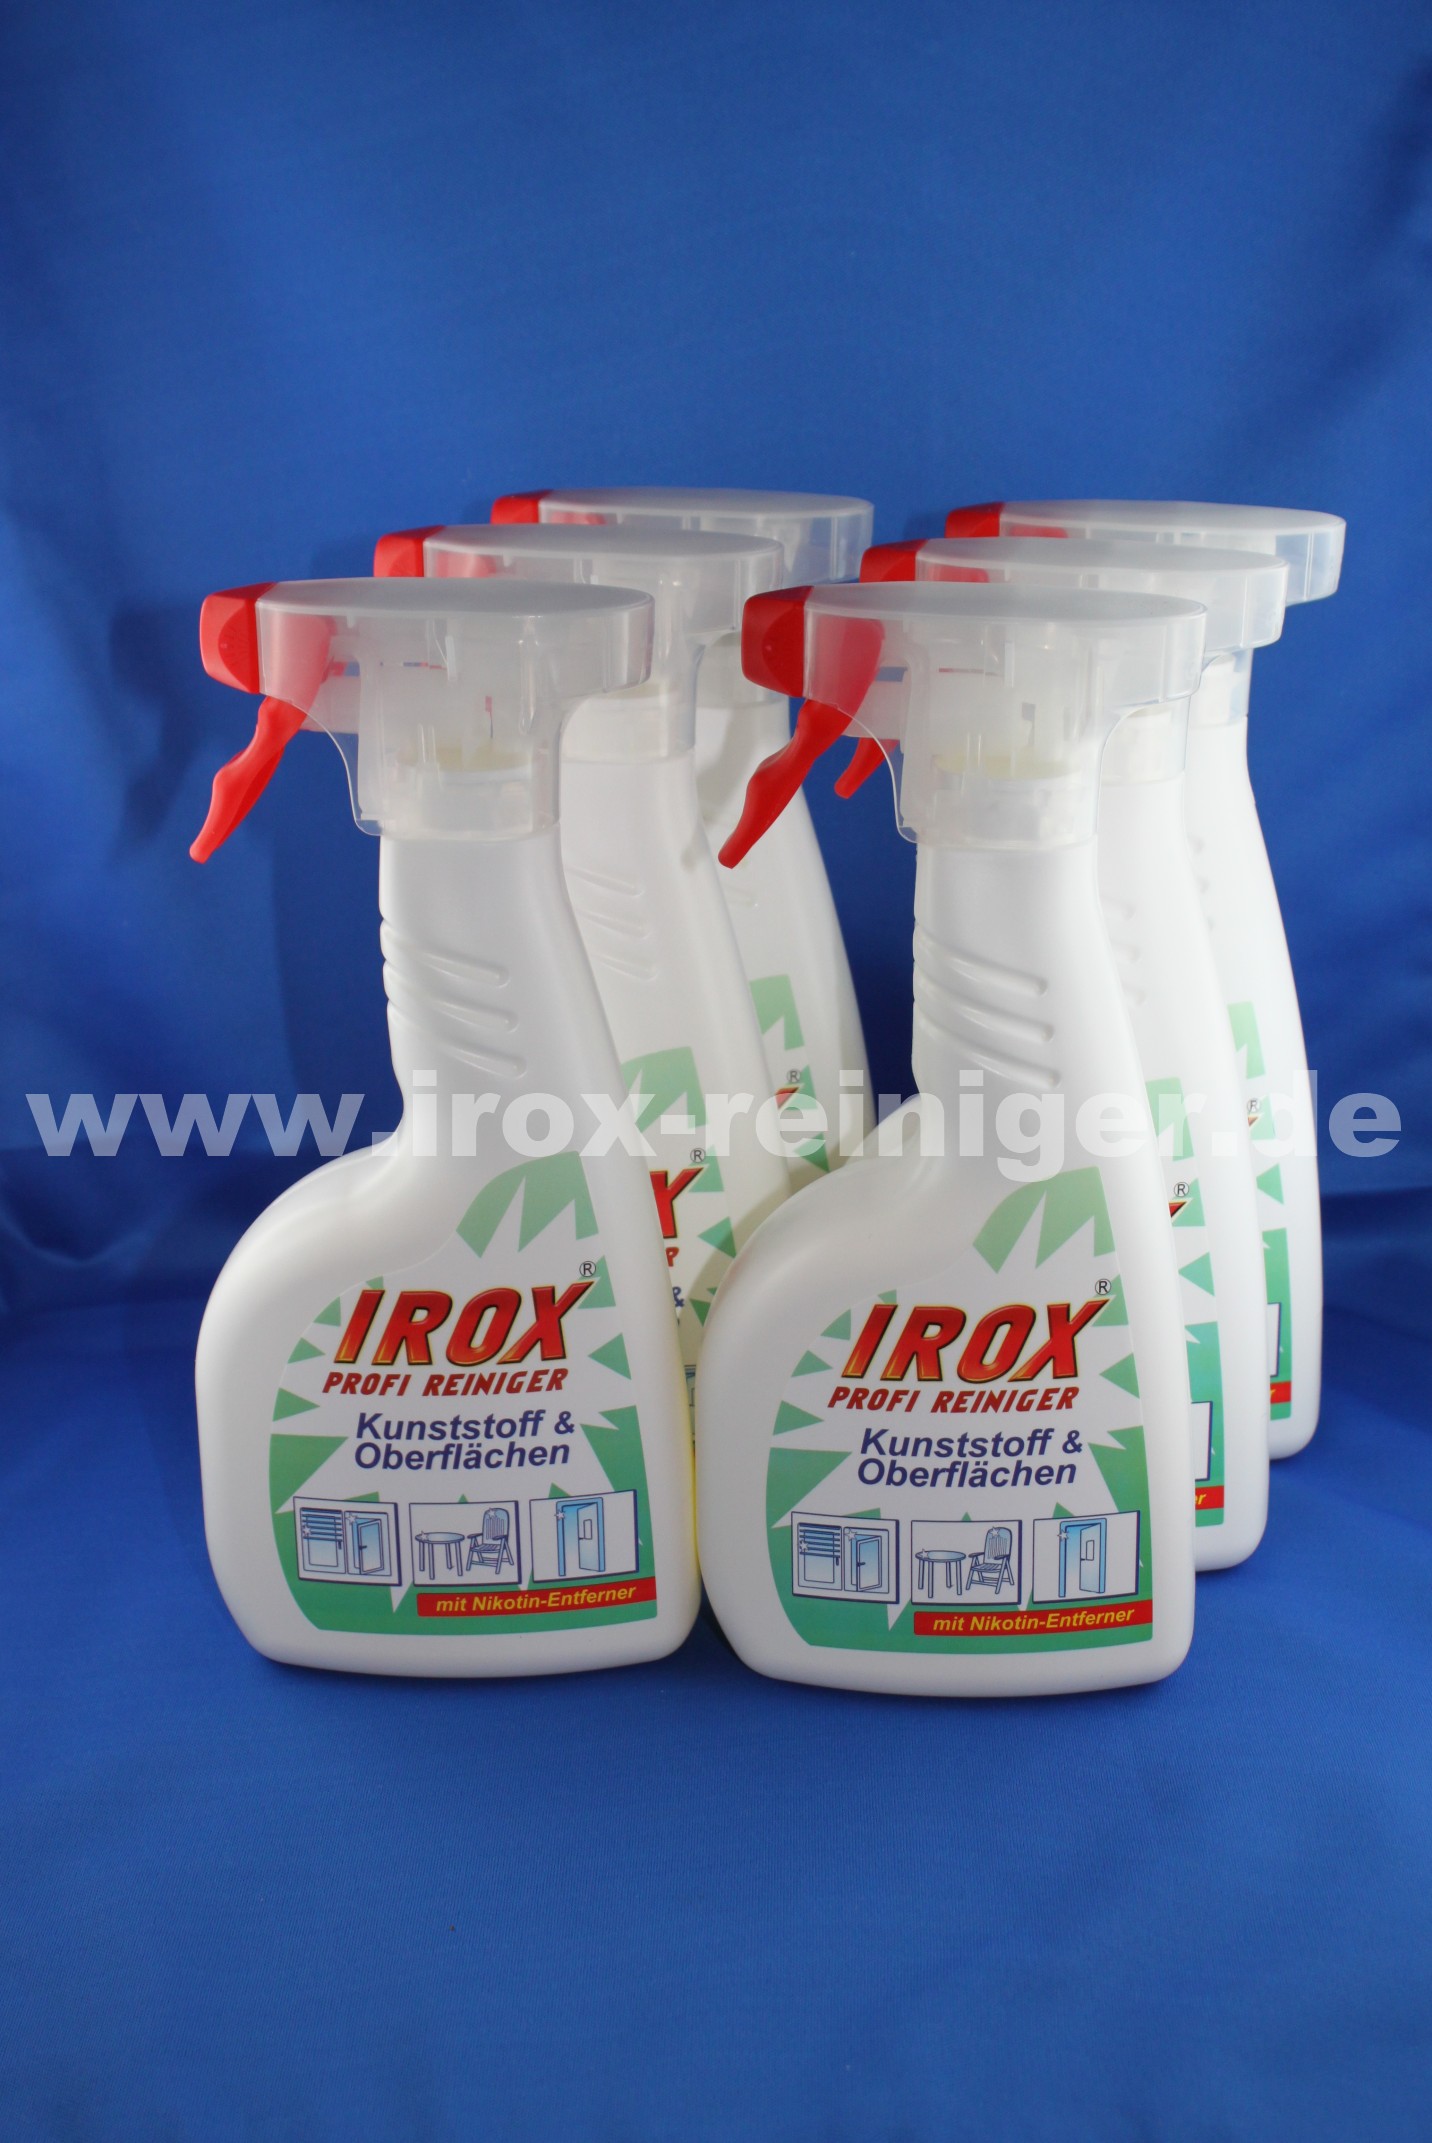 Irox-Reiniger Onlineshop - IROX Profi Reiniger Kunststoff & Oberflächen - 6  x 500ml